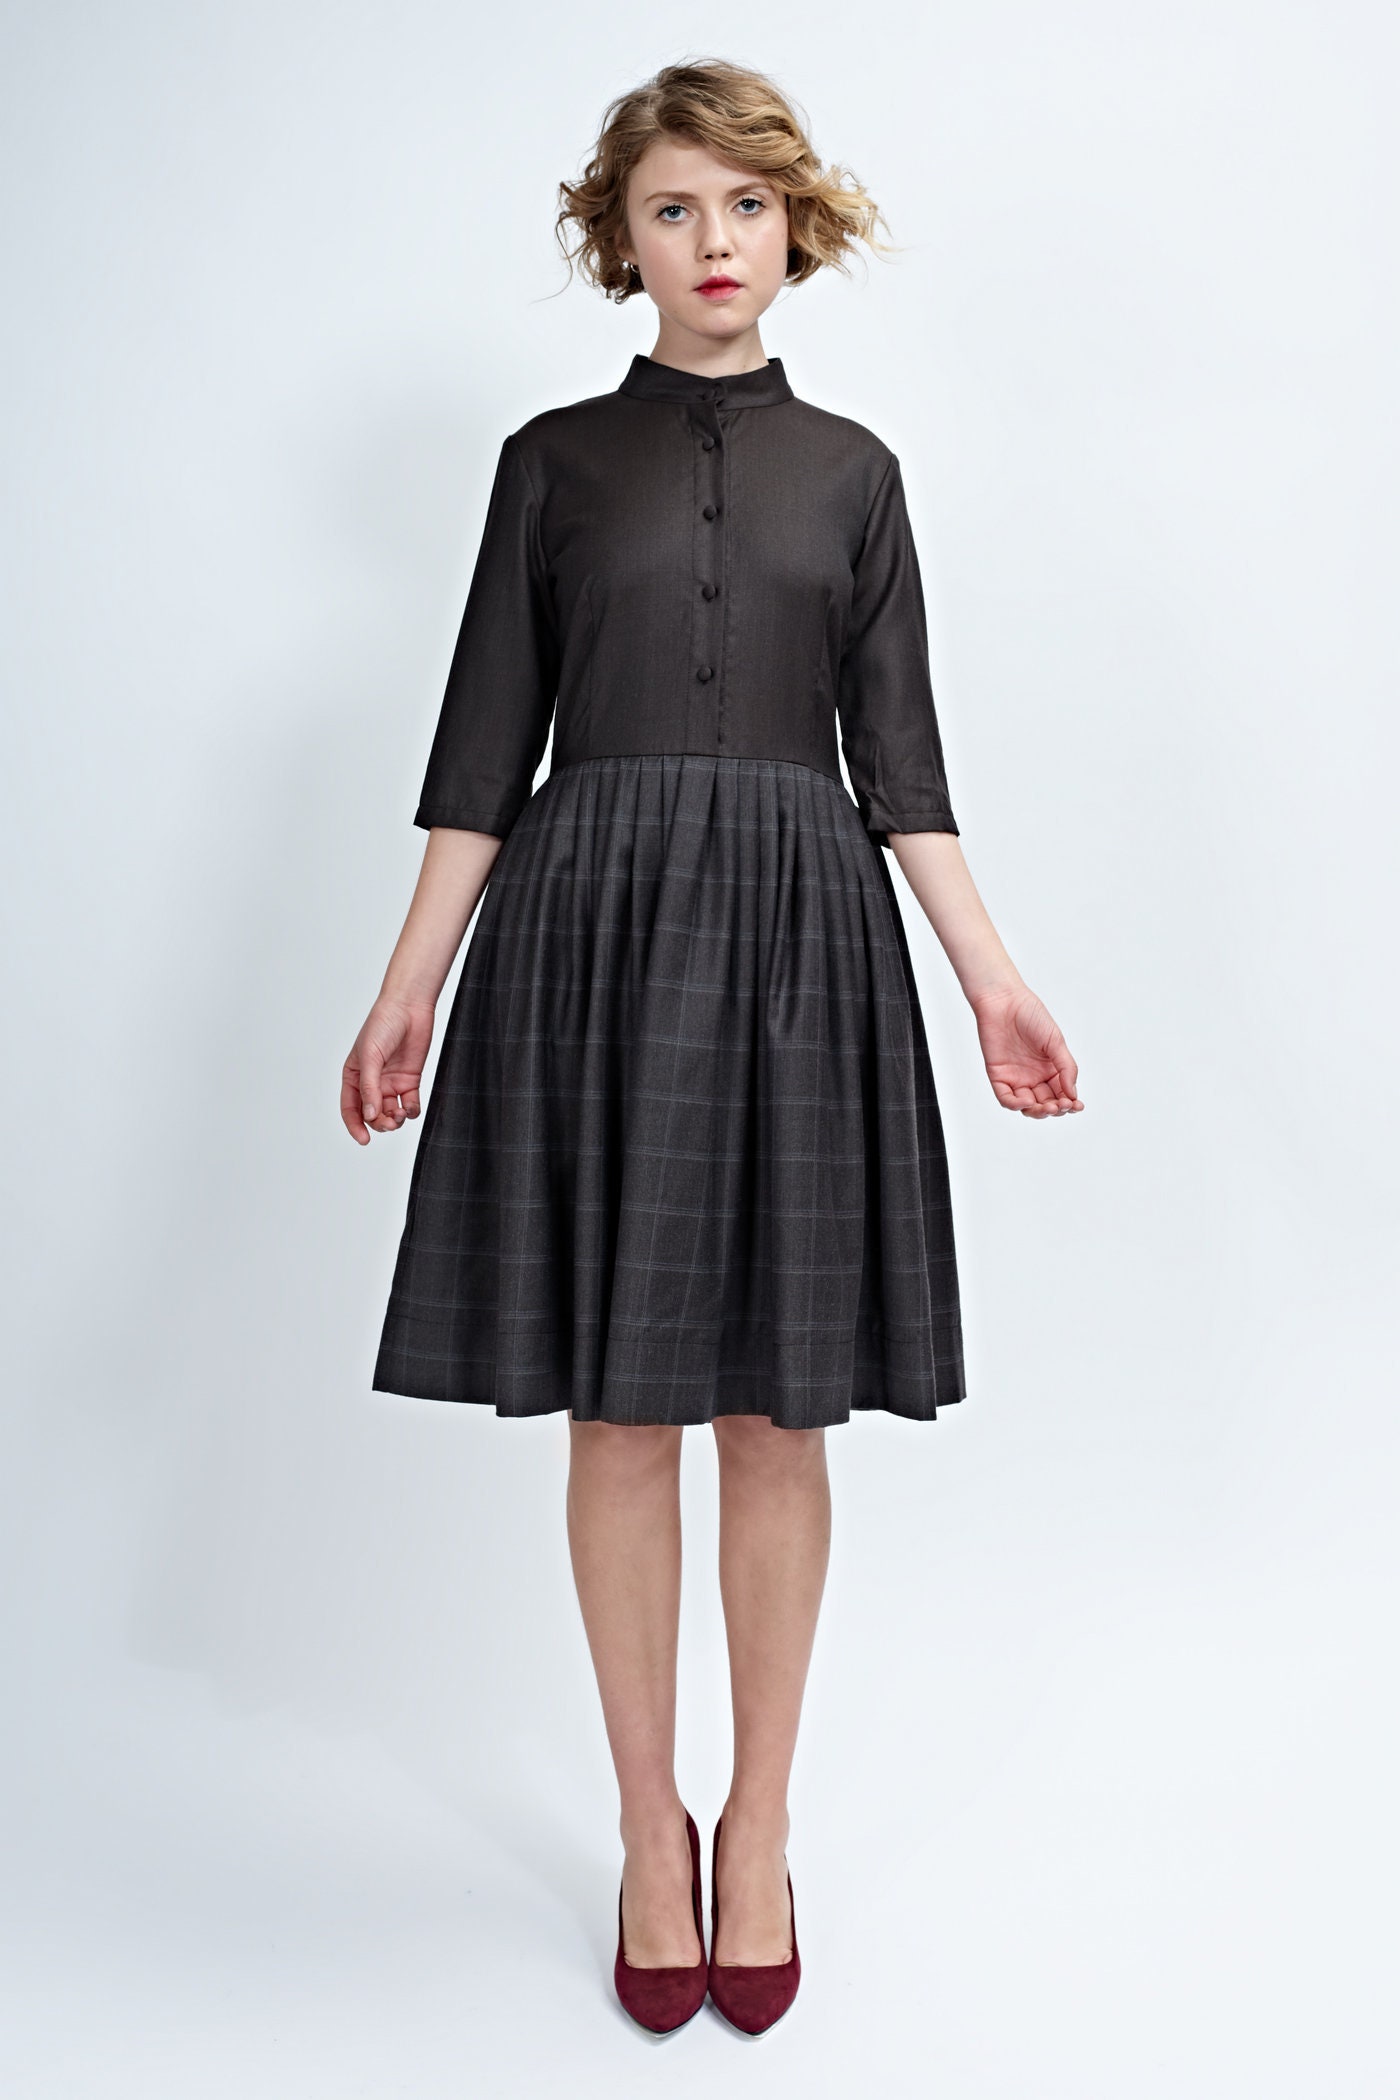 Modest wool midi dress s retro style shirt collar   Etsy 日本